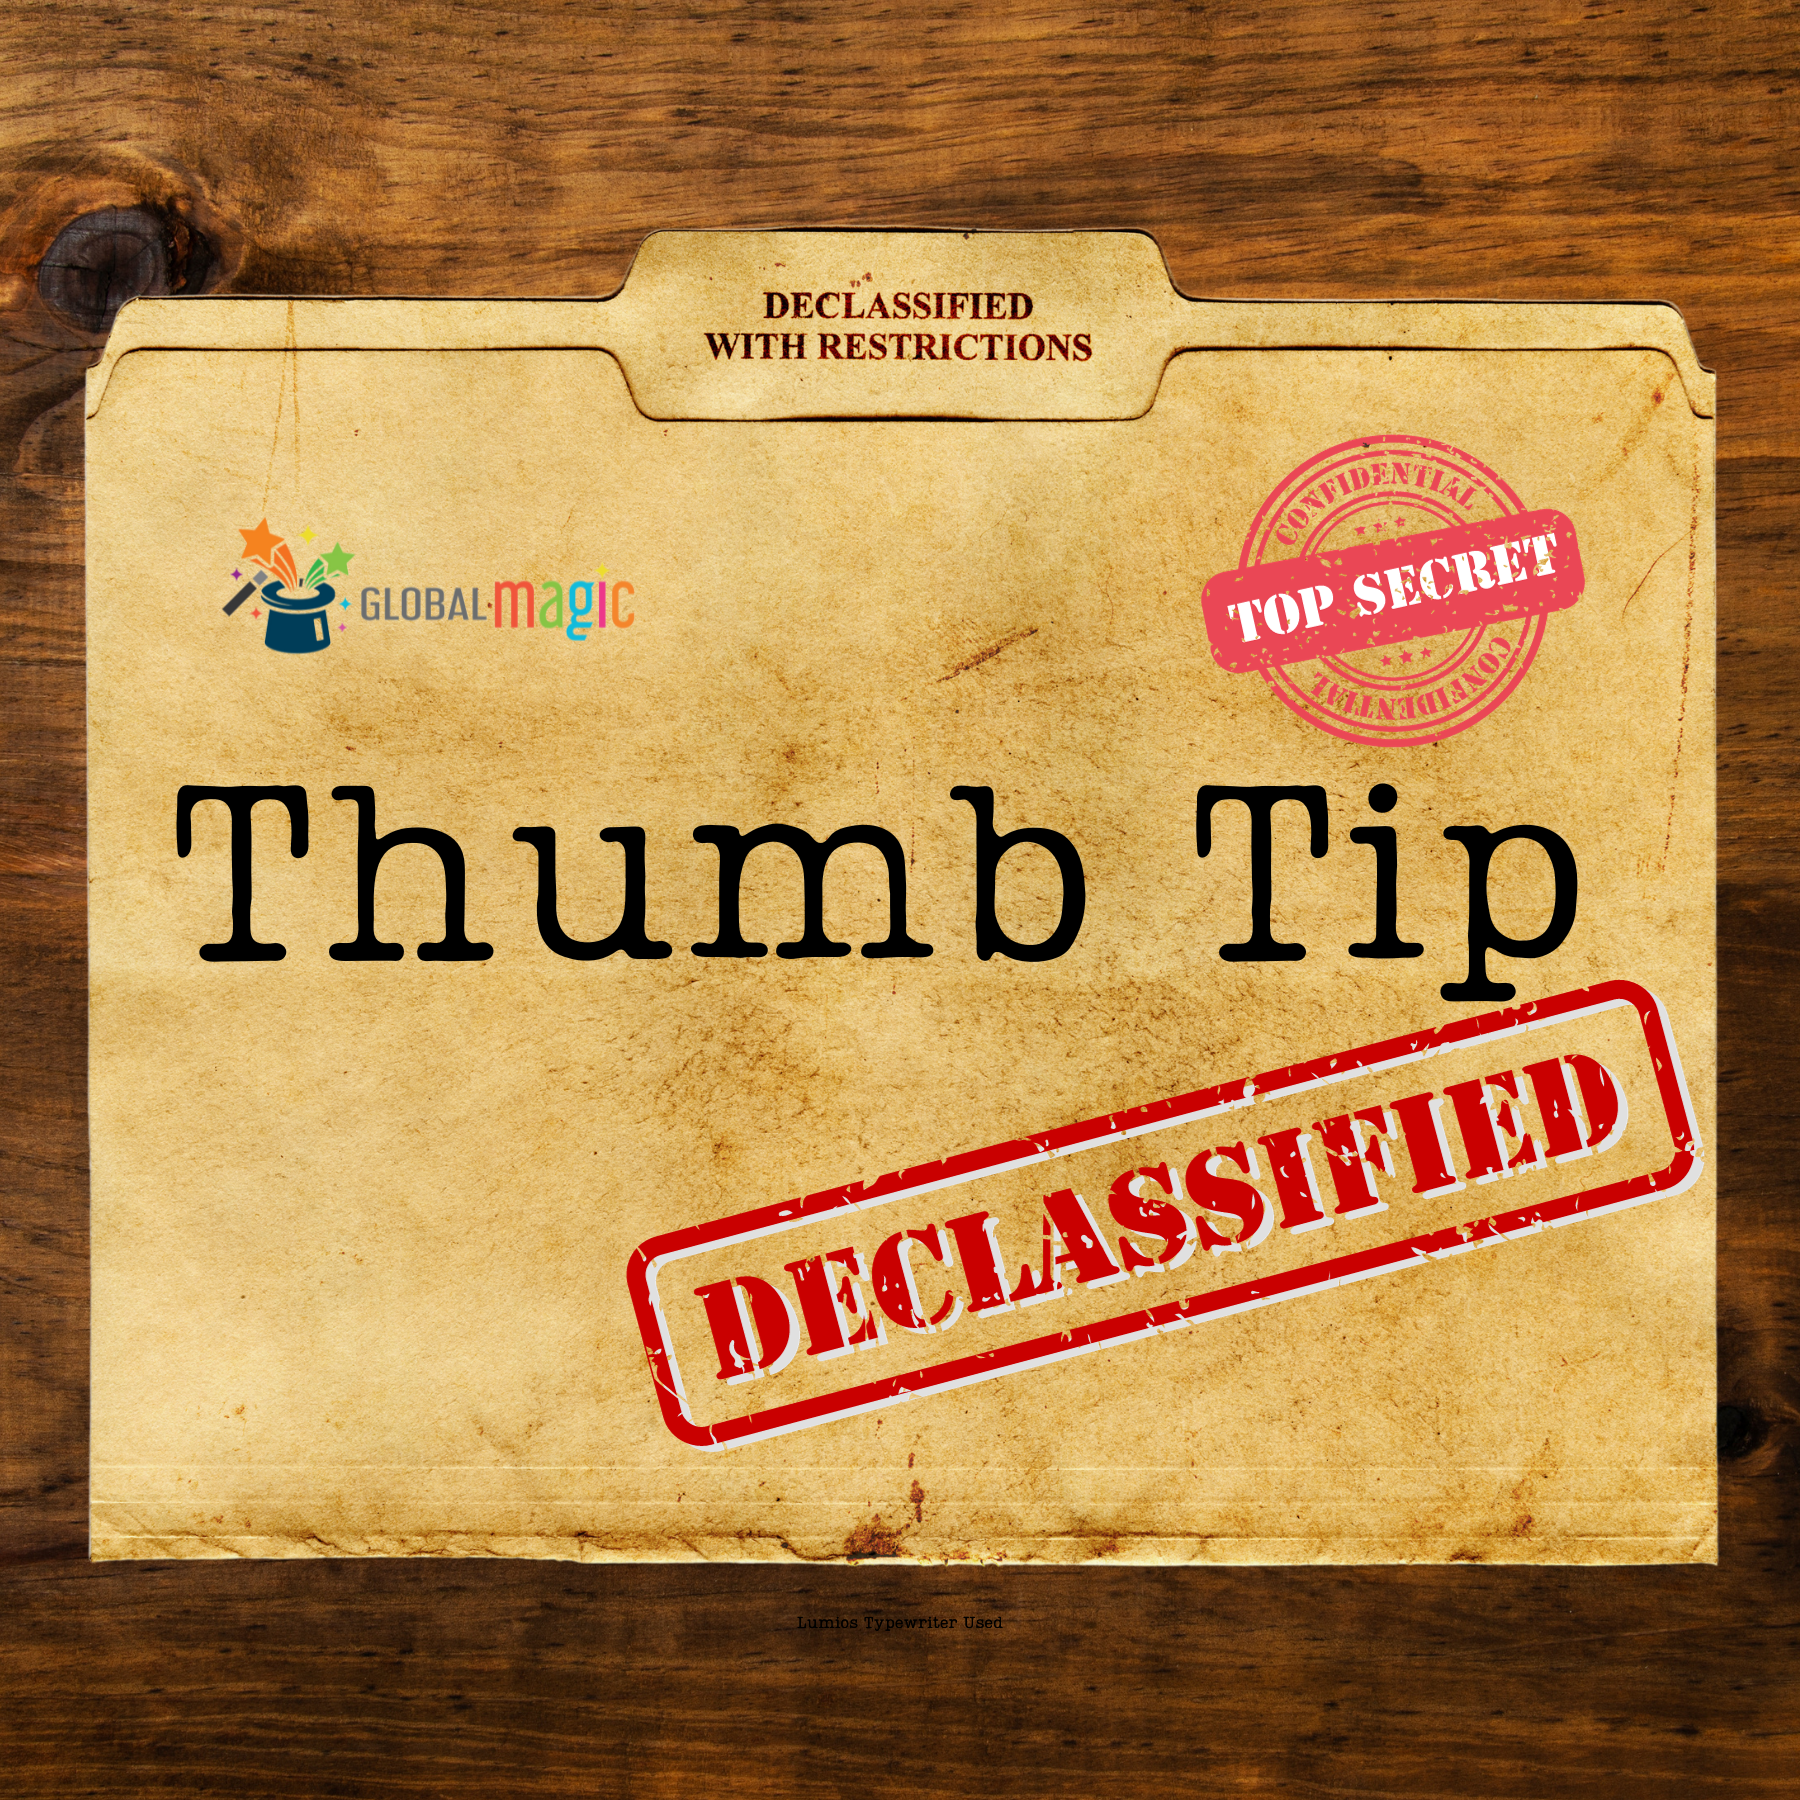 Thumb Tip - Declassified